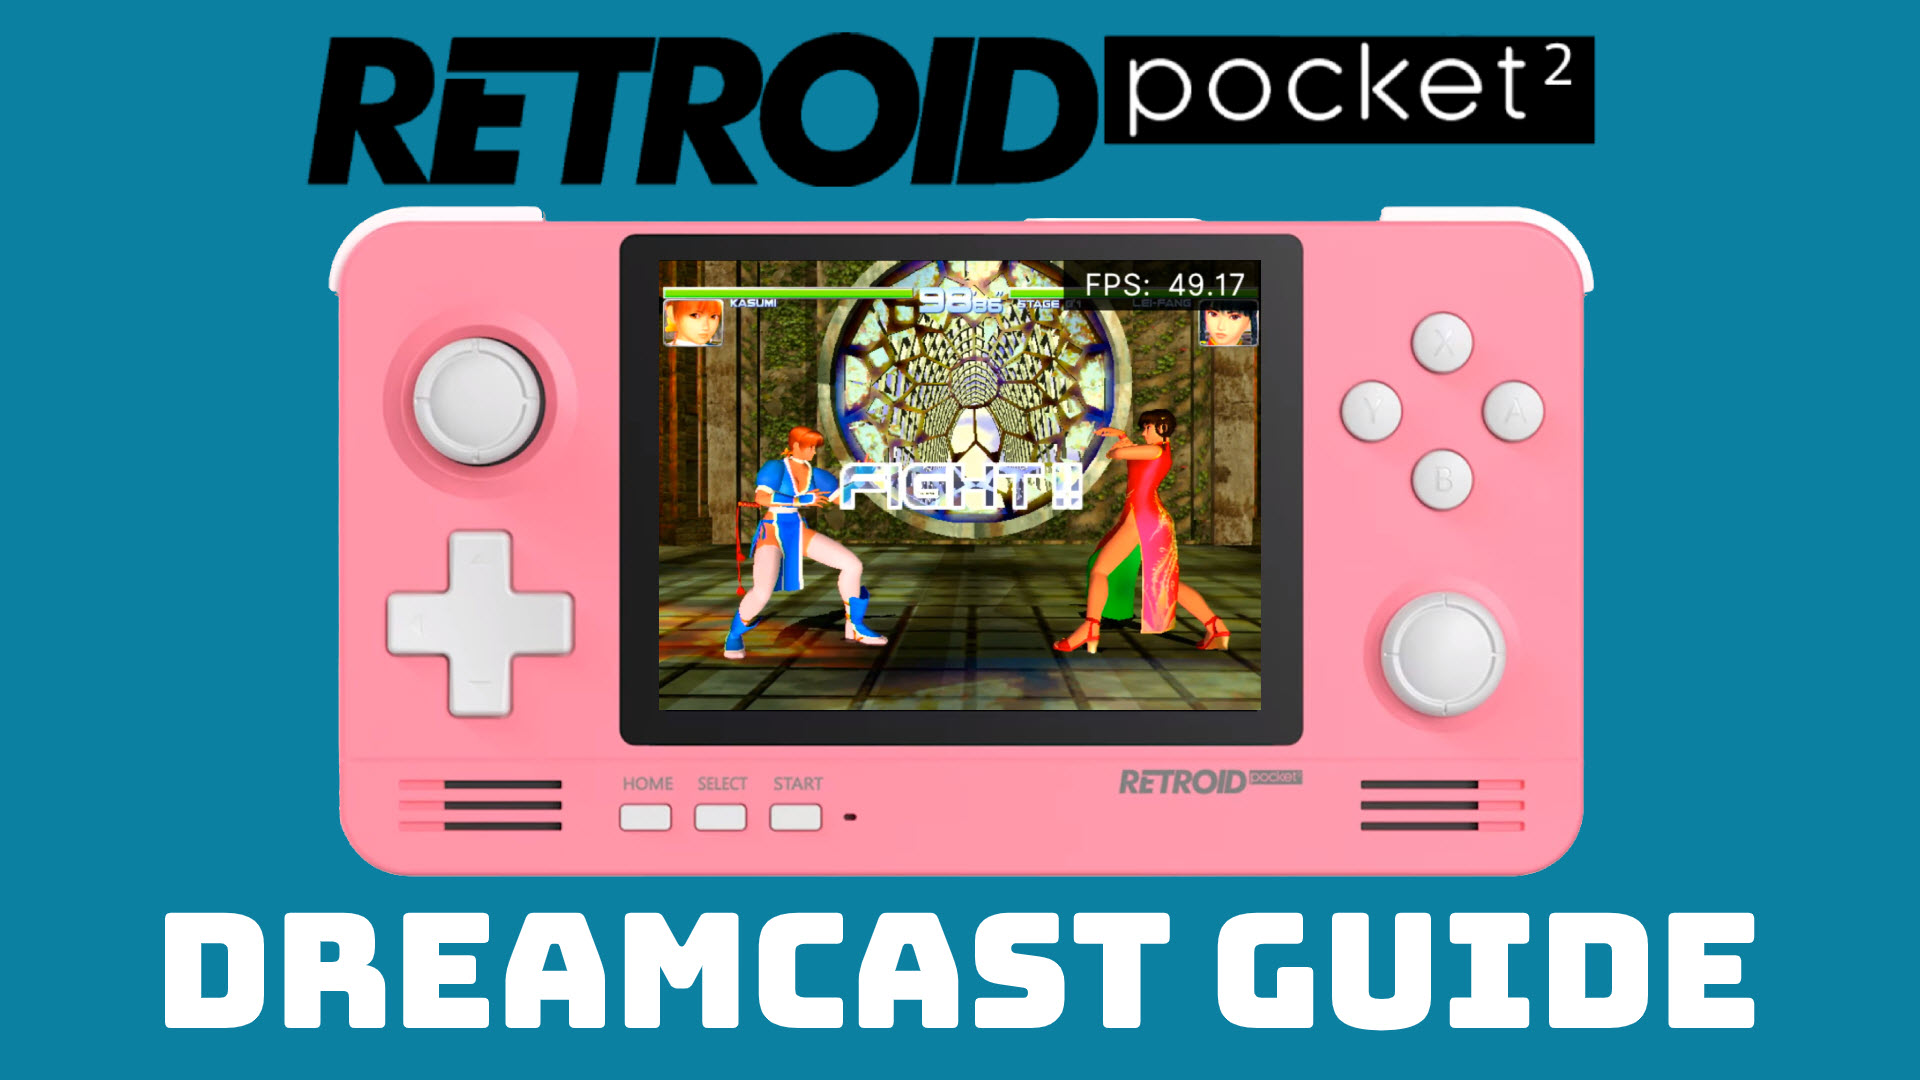 Retroid pocket 4 pro купить. Retroid Pocket 2. Retroid Pocket 2 характеристики. Sega Dreamcast. Retroid Retro 2 +.